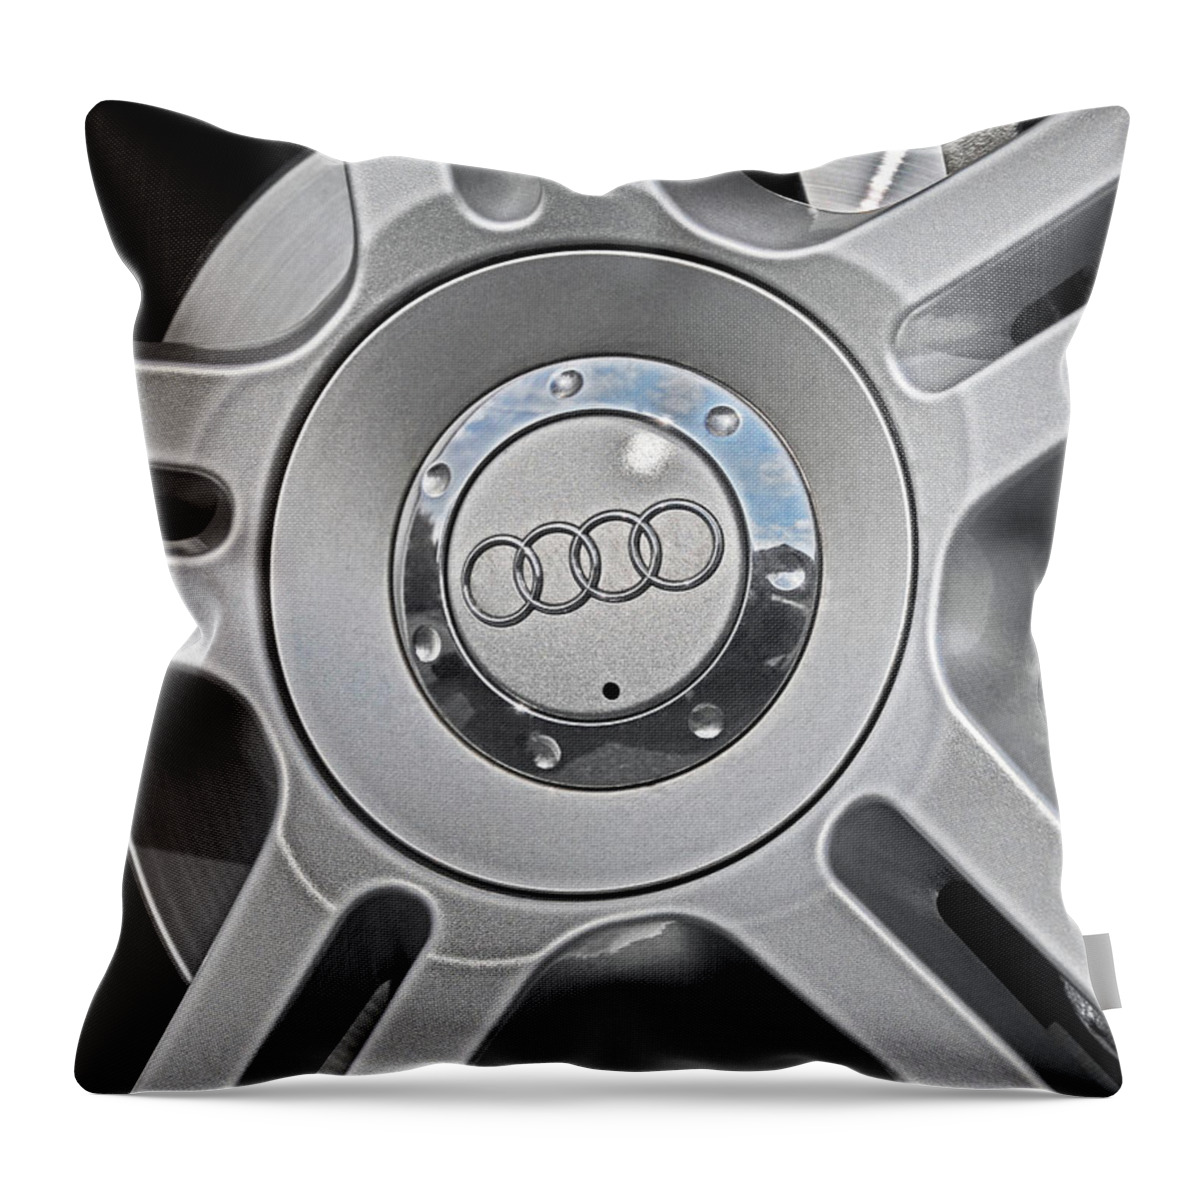 Wheel Throw Pillow featuring the photograph The Audi wheel by Dragan Kudjerski